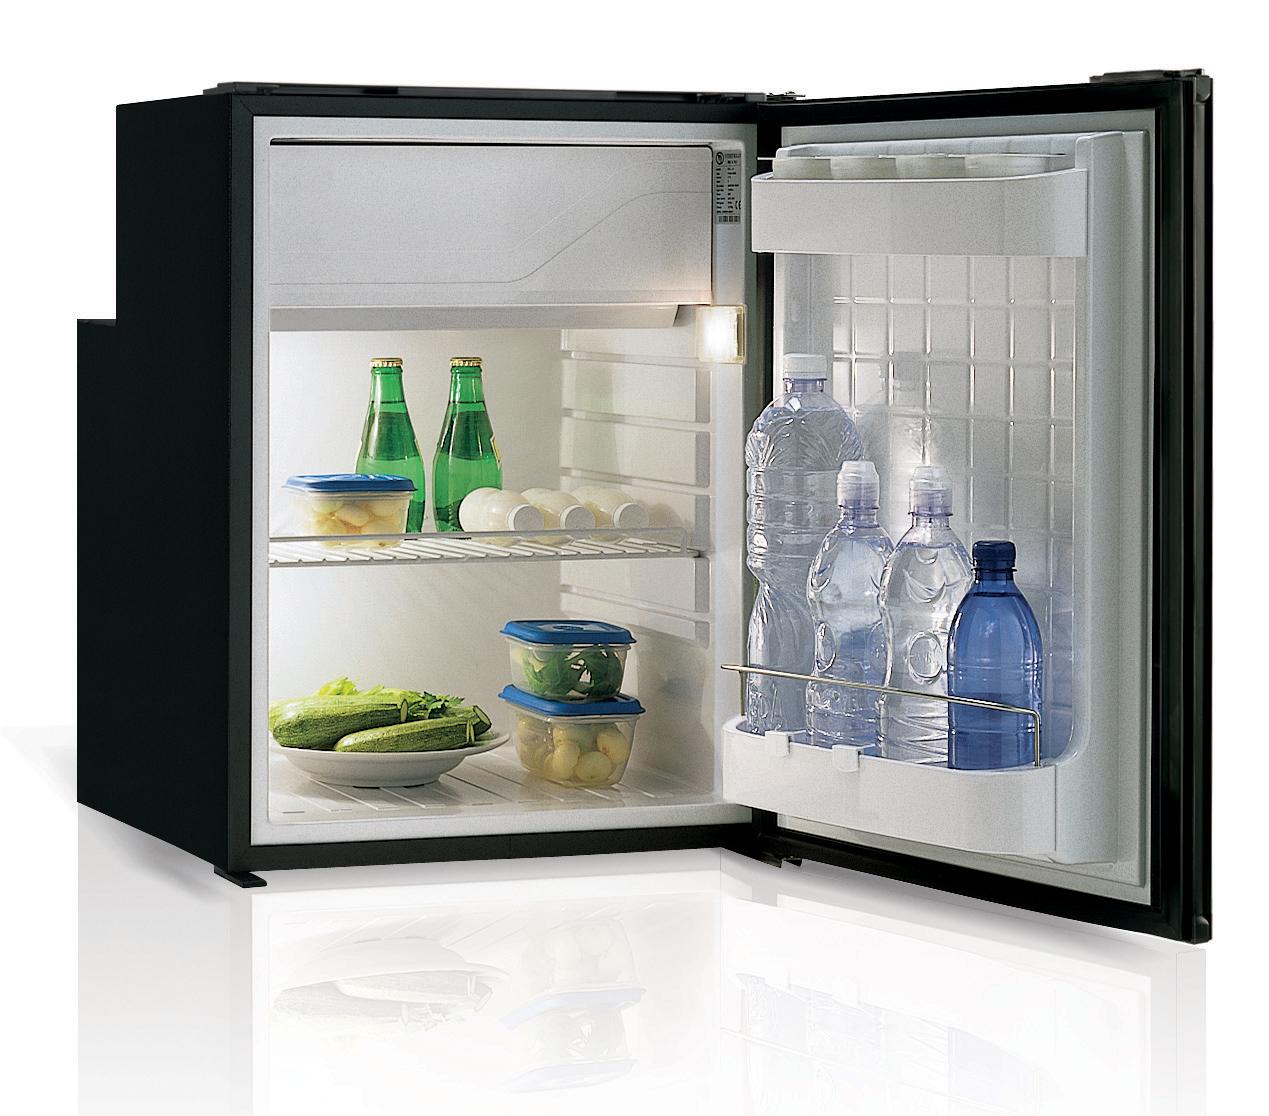 Product C90 - 90 Litre 12/24 volt Vitrifrigo motorhome and campervan fridge - Penguin Refrigeration image